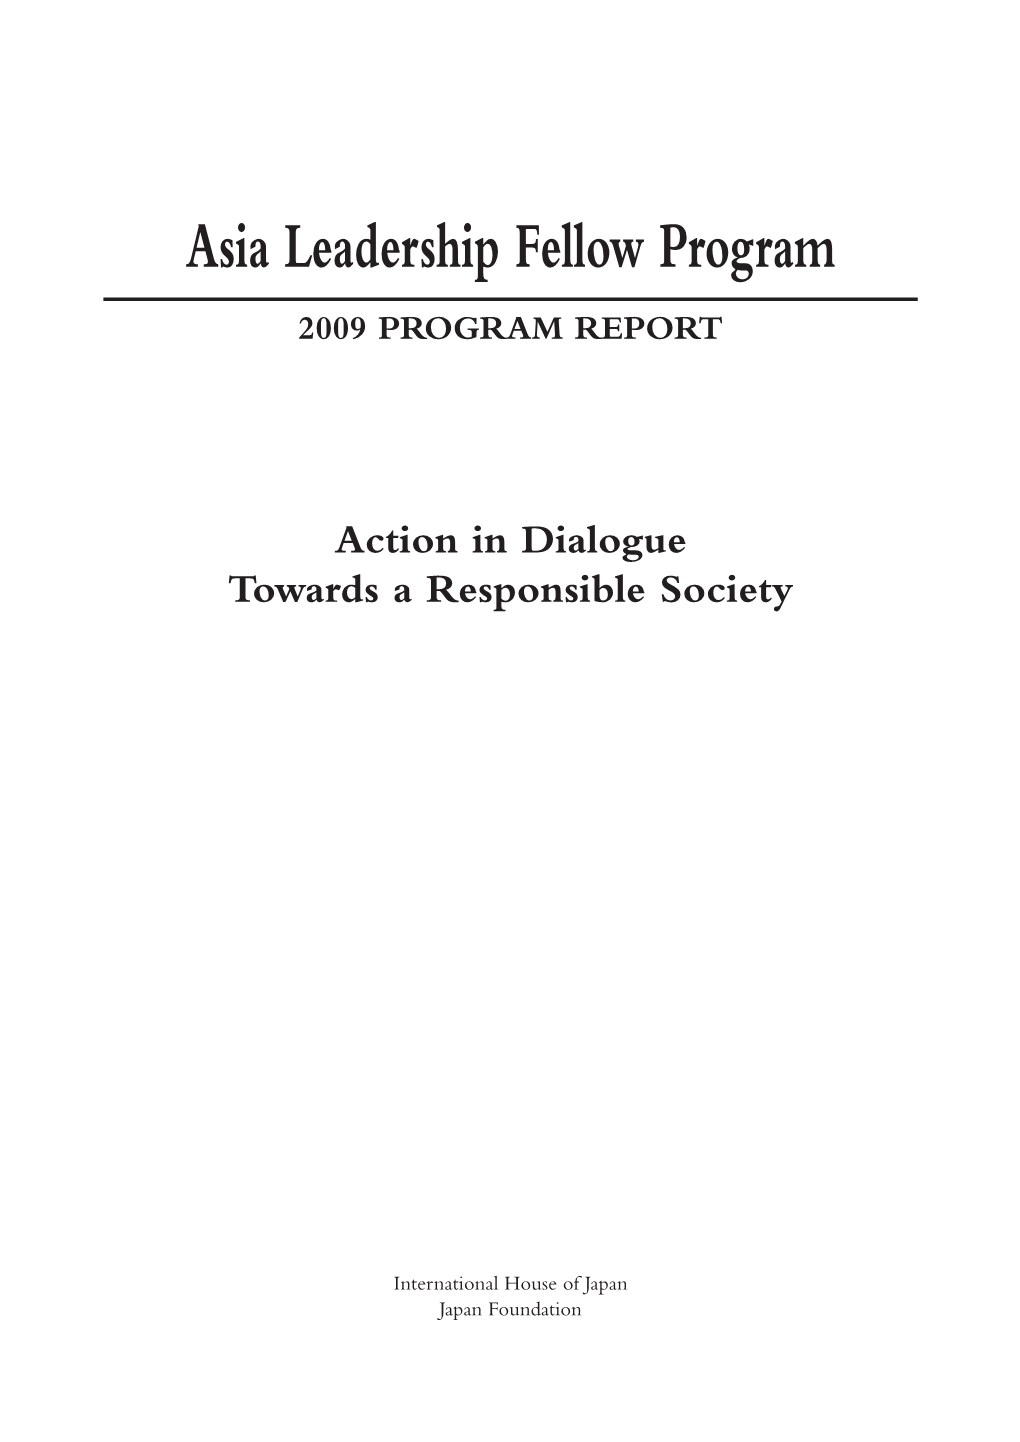 2009 Program Report